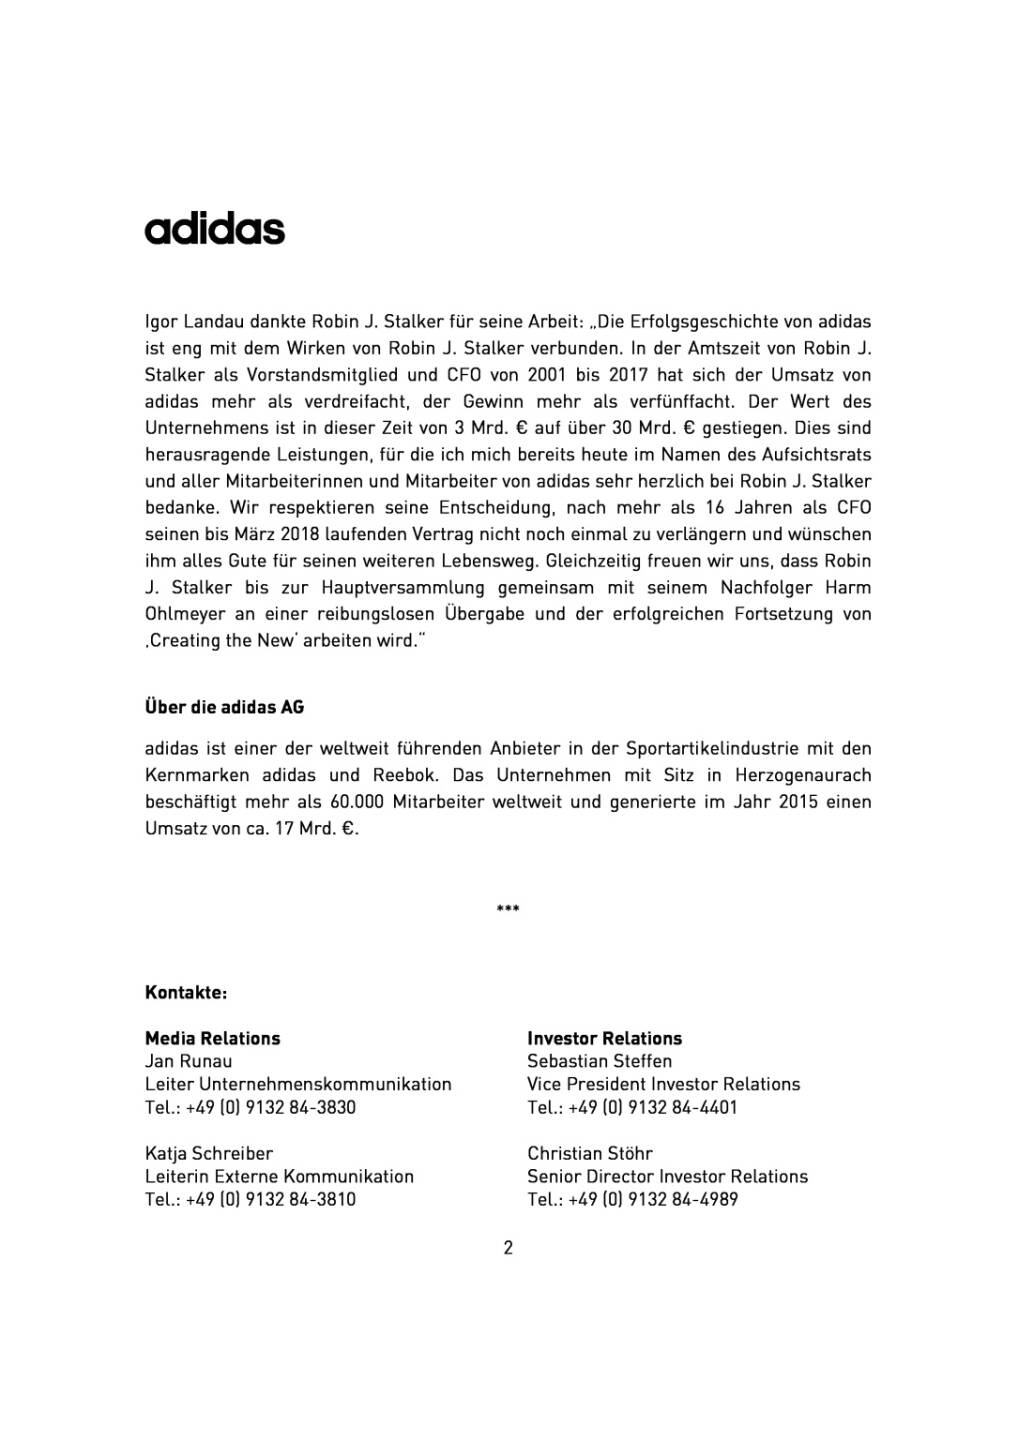 adidas: Harm Ohlmeyer neuer CFO, Seite 2/3, komplettes Dokument unter http://boerse-social.com/static/uploads/file_2143_adidas_harm_ohlmeyer_neuer_cfo.pdf